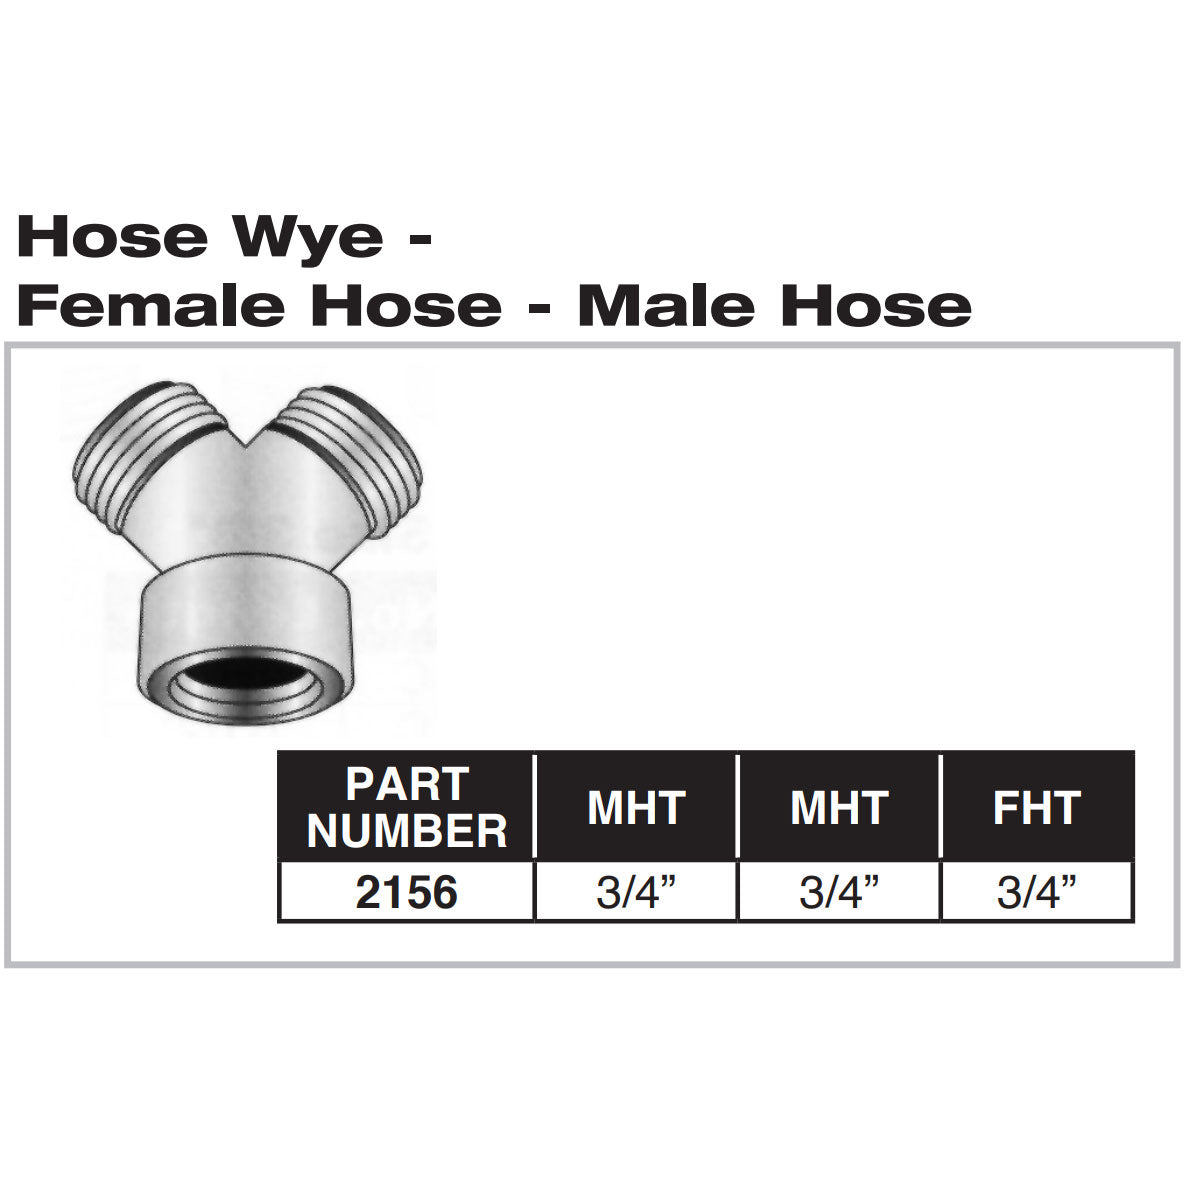 2156 - Hose Wye - 3/4" FHT x 3/4" MHT